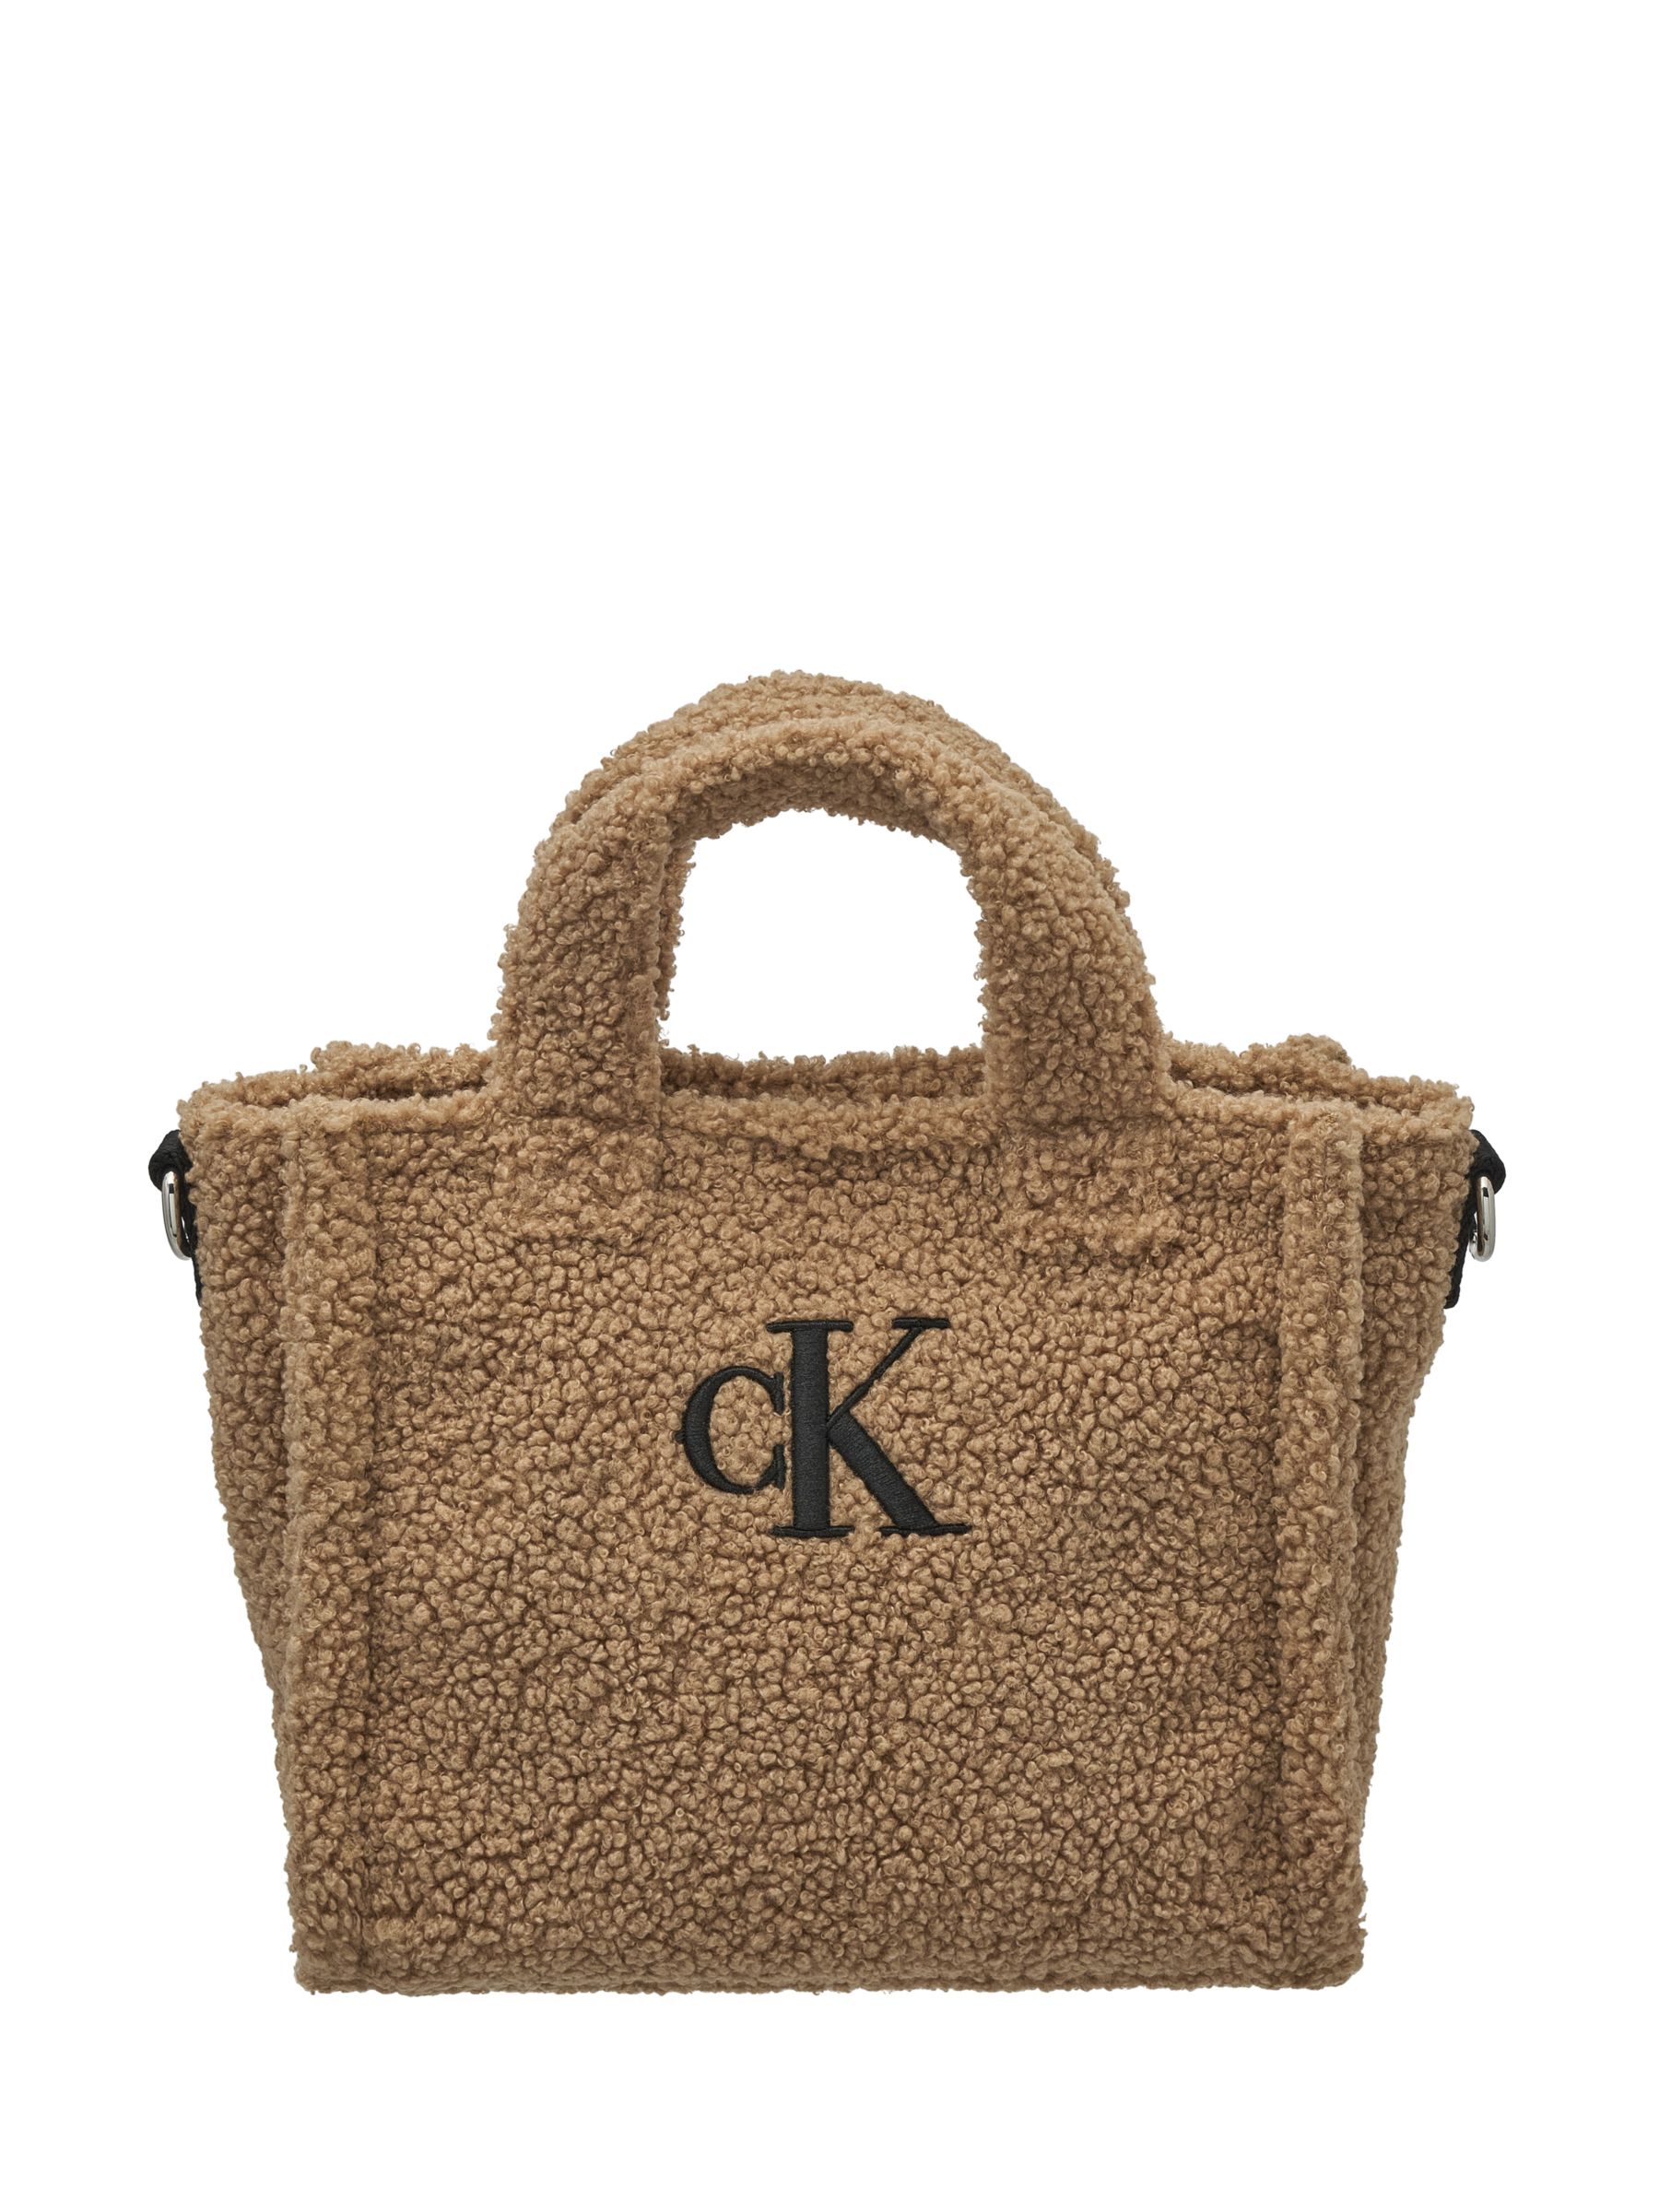 Calvin Klein Kids' Teddy Logo Tote Bag, Timeless Camel